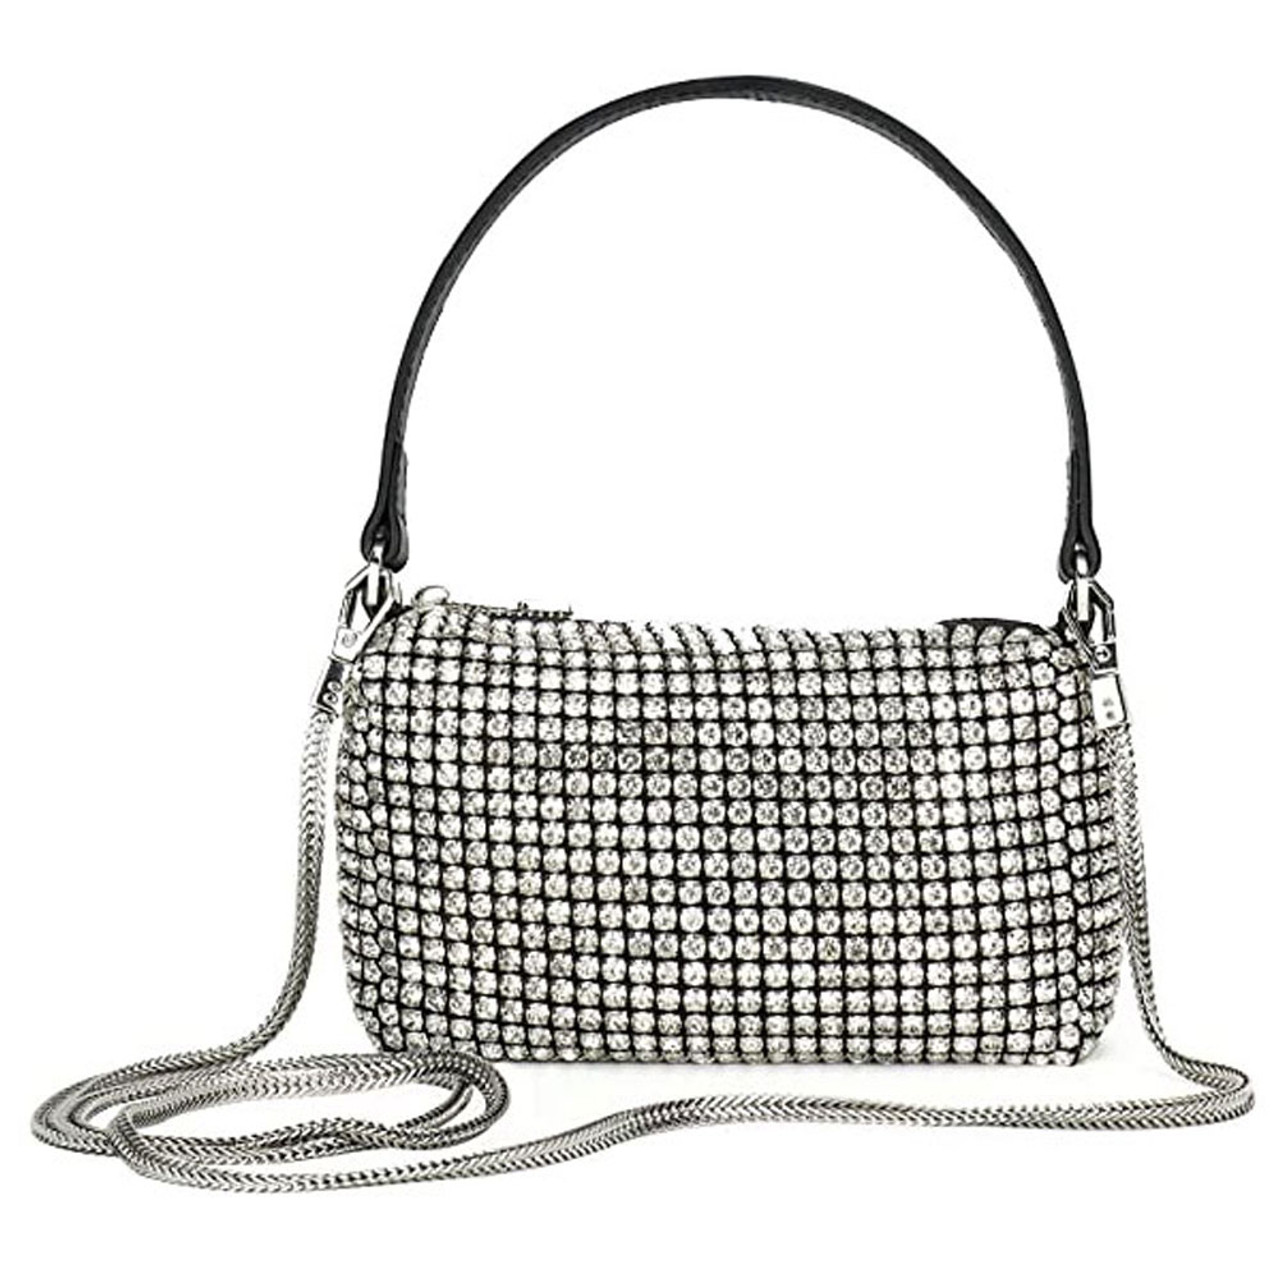 BLING! Vintage & Collectible Silver Sequins Purse/Clutch/Handbag w/Chain  Strap | eBay